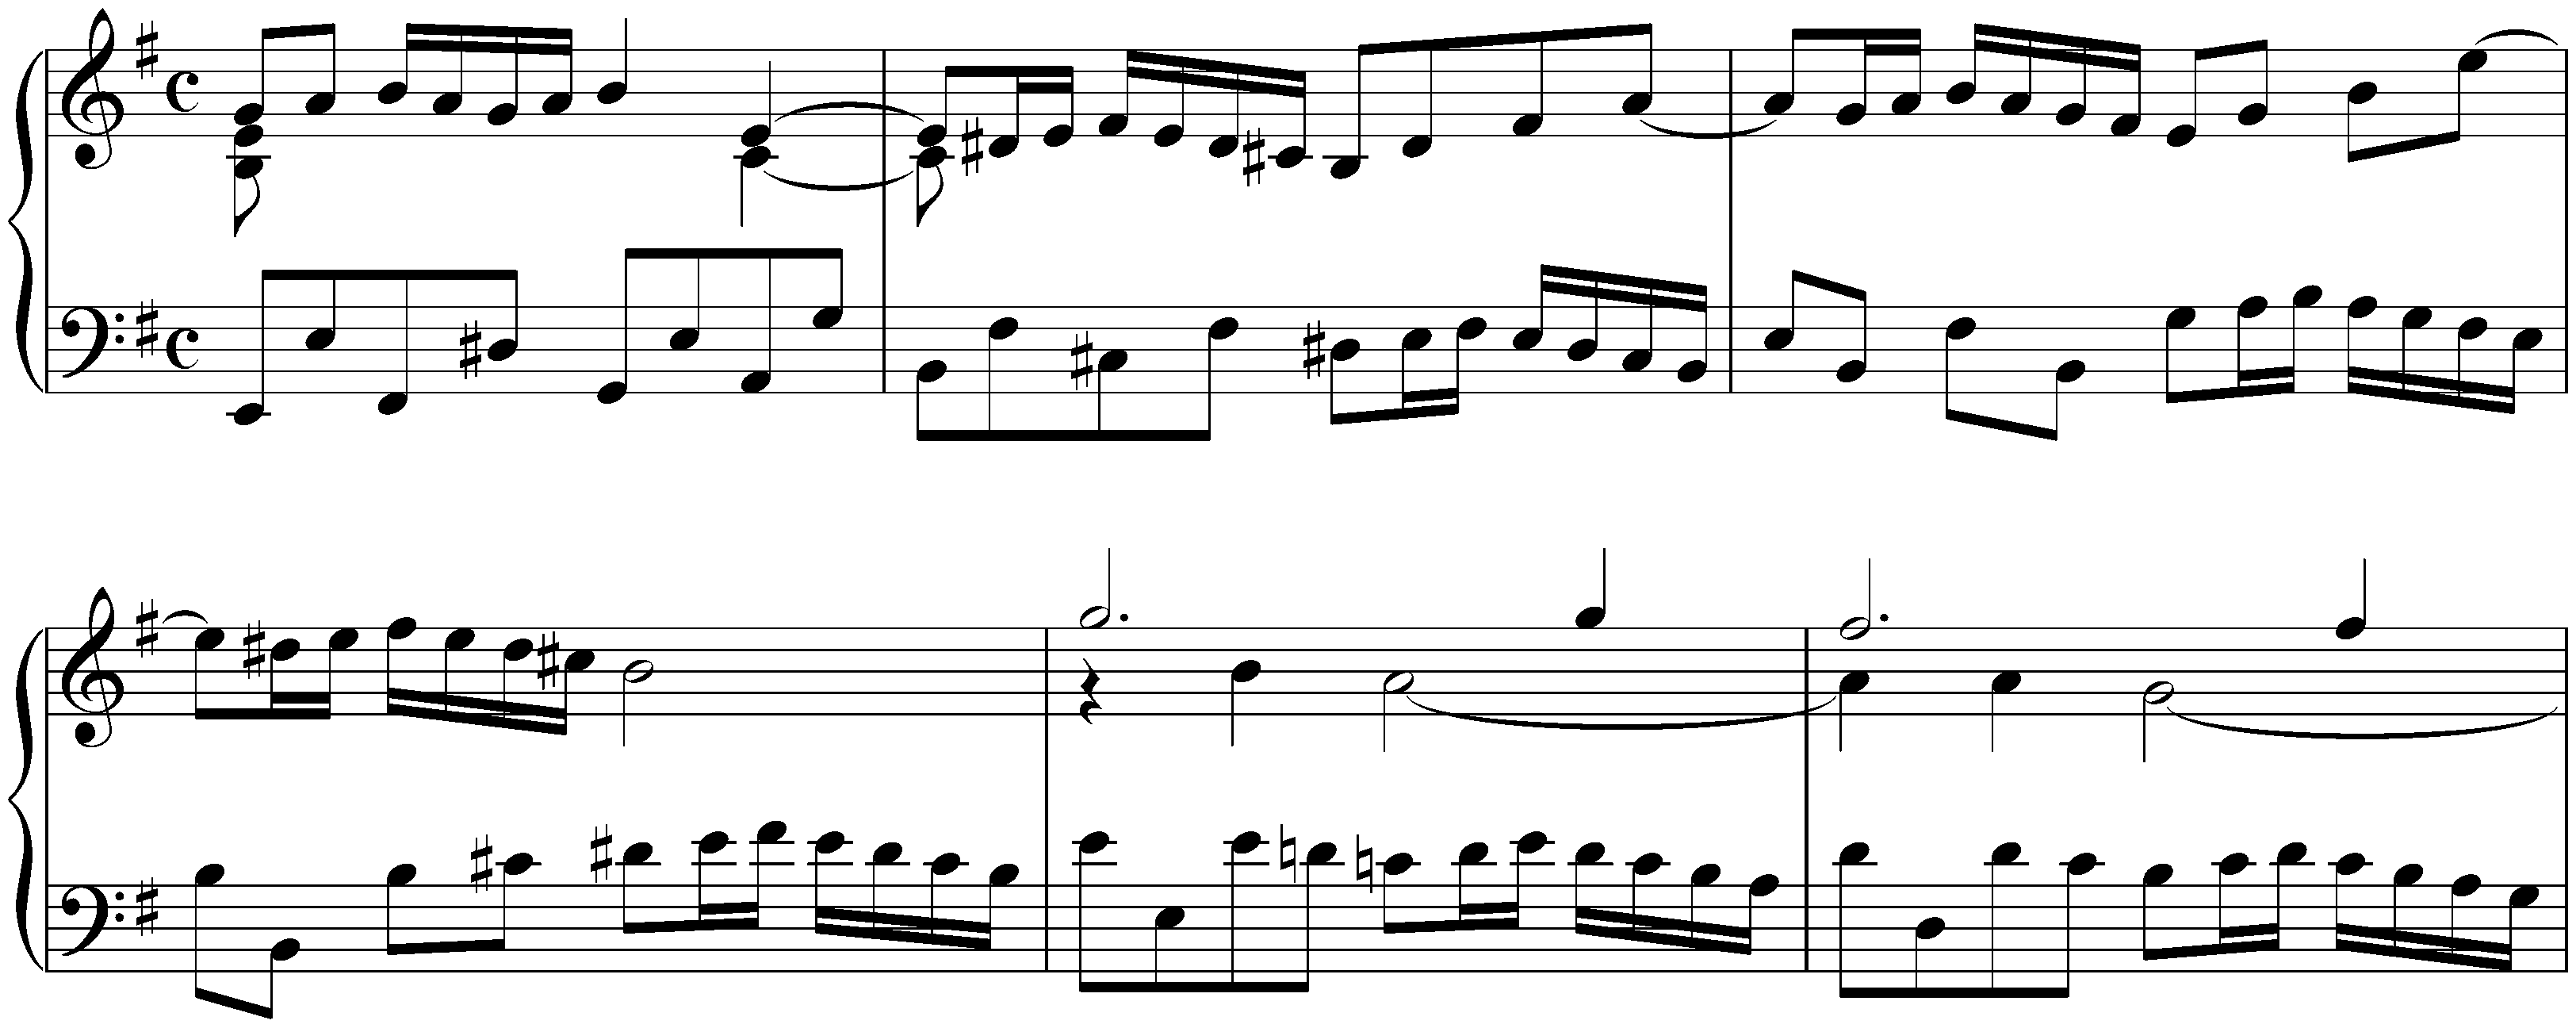 Sonata no. 6 in G major, BWV 1019; 3. Allegro